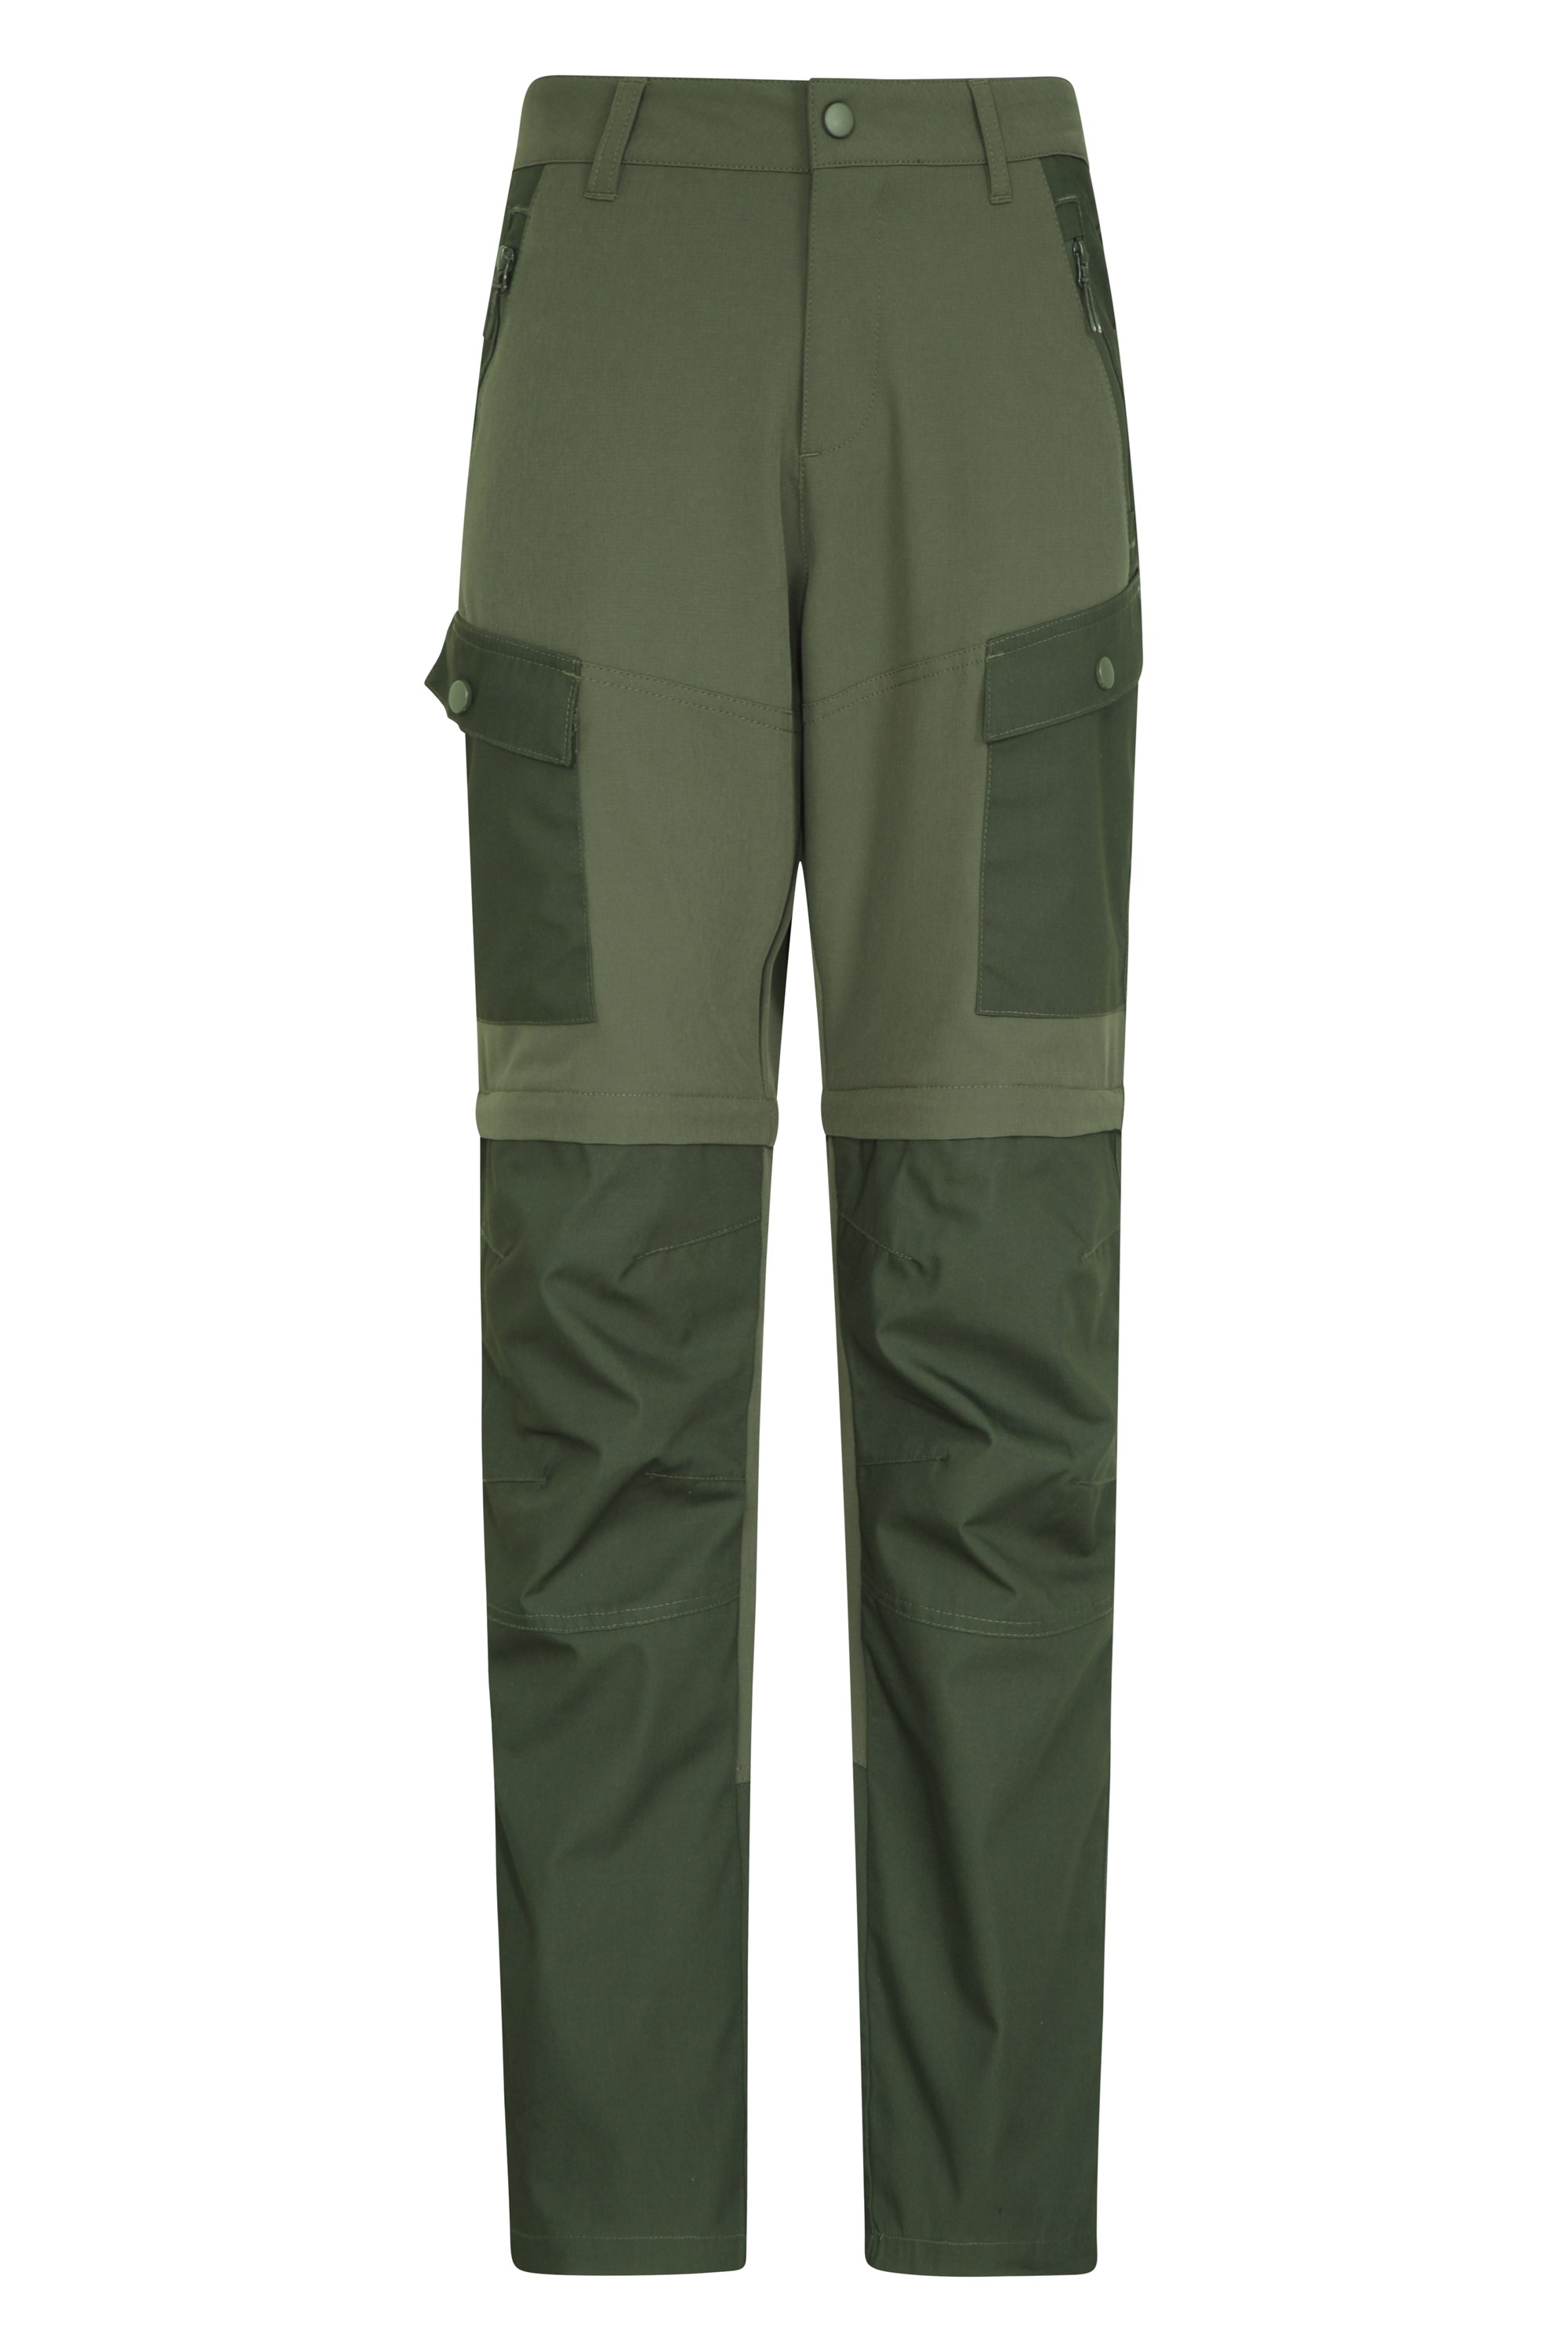 Mountain Warehouse Mens Winter Trek Fleece Lined Walking Hiking Outdoor  Trousers #Clothing … | Outdoor outfit, Mens fleece, Pants